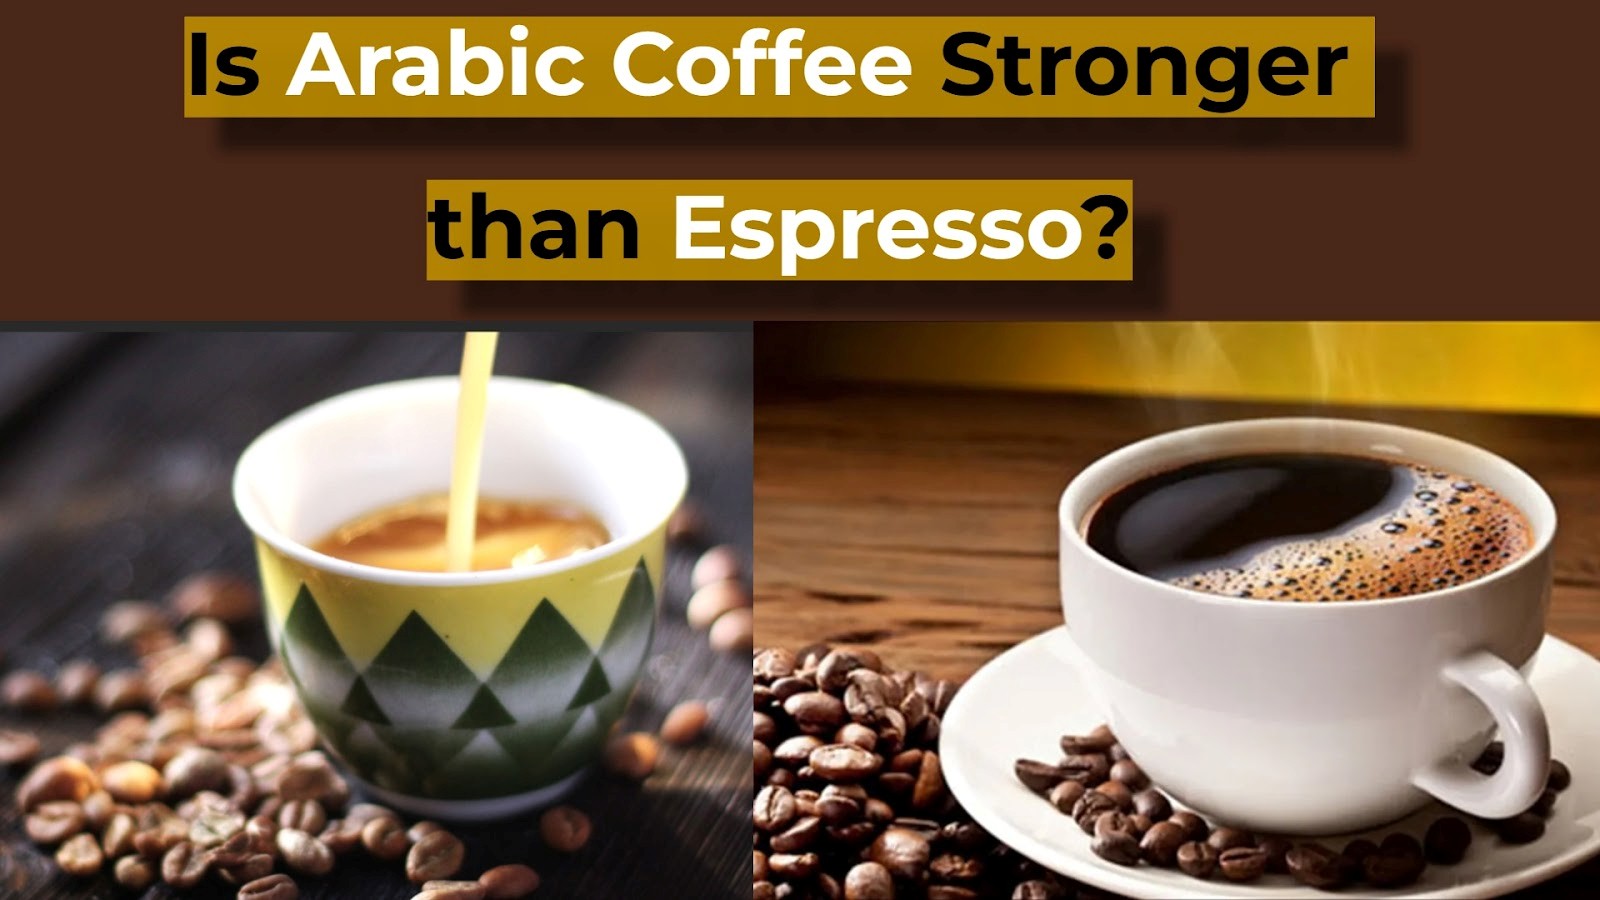 Arabic Coffee Stronger than Espresso